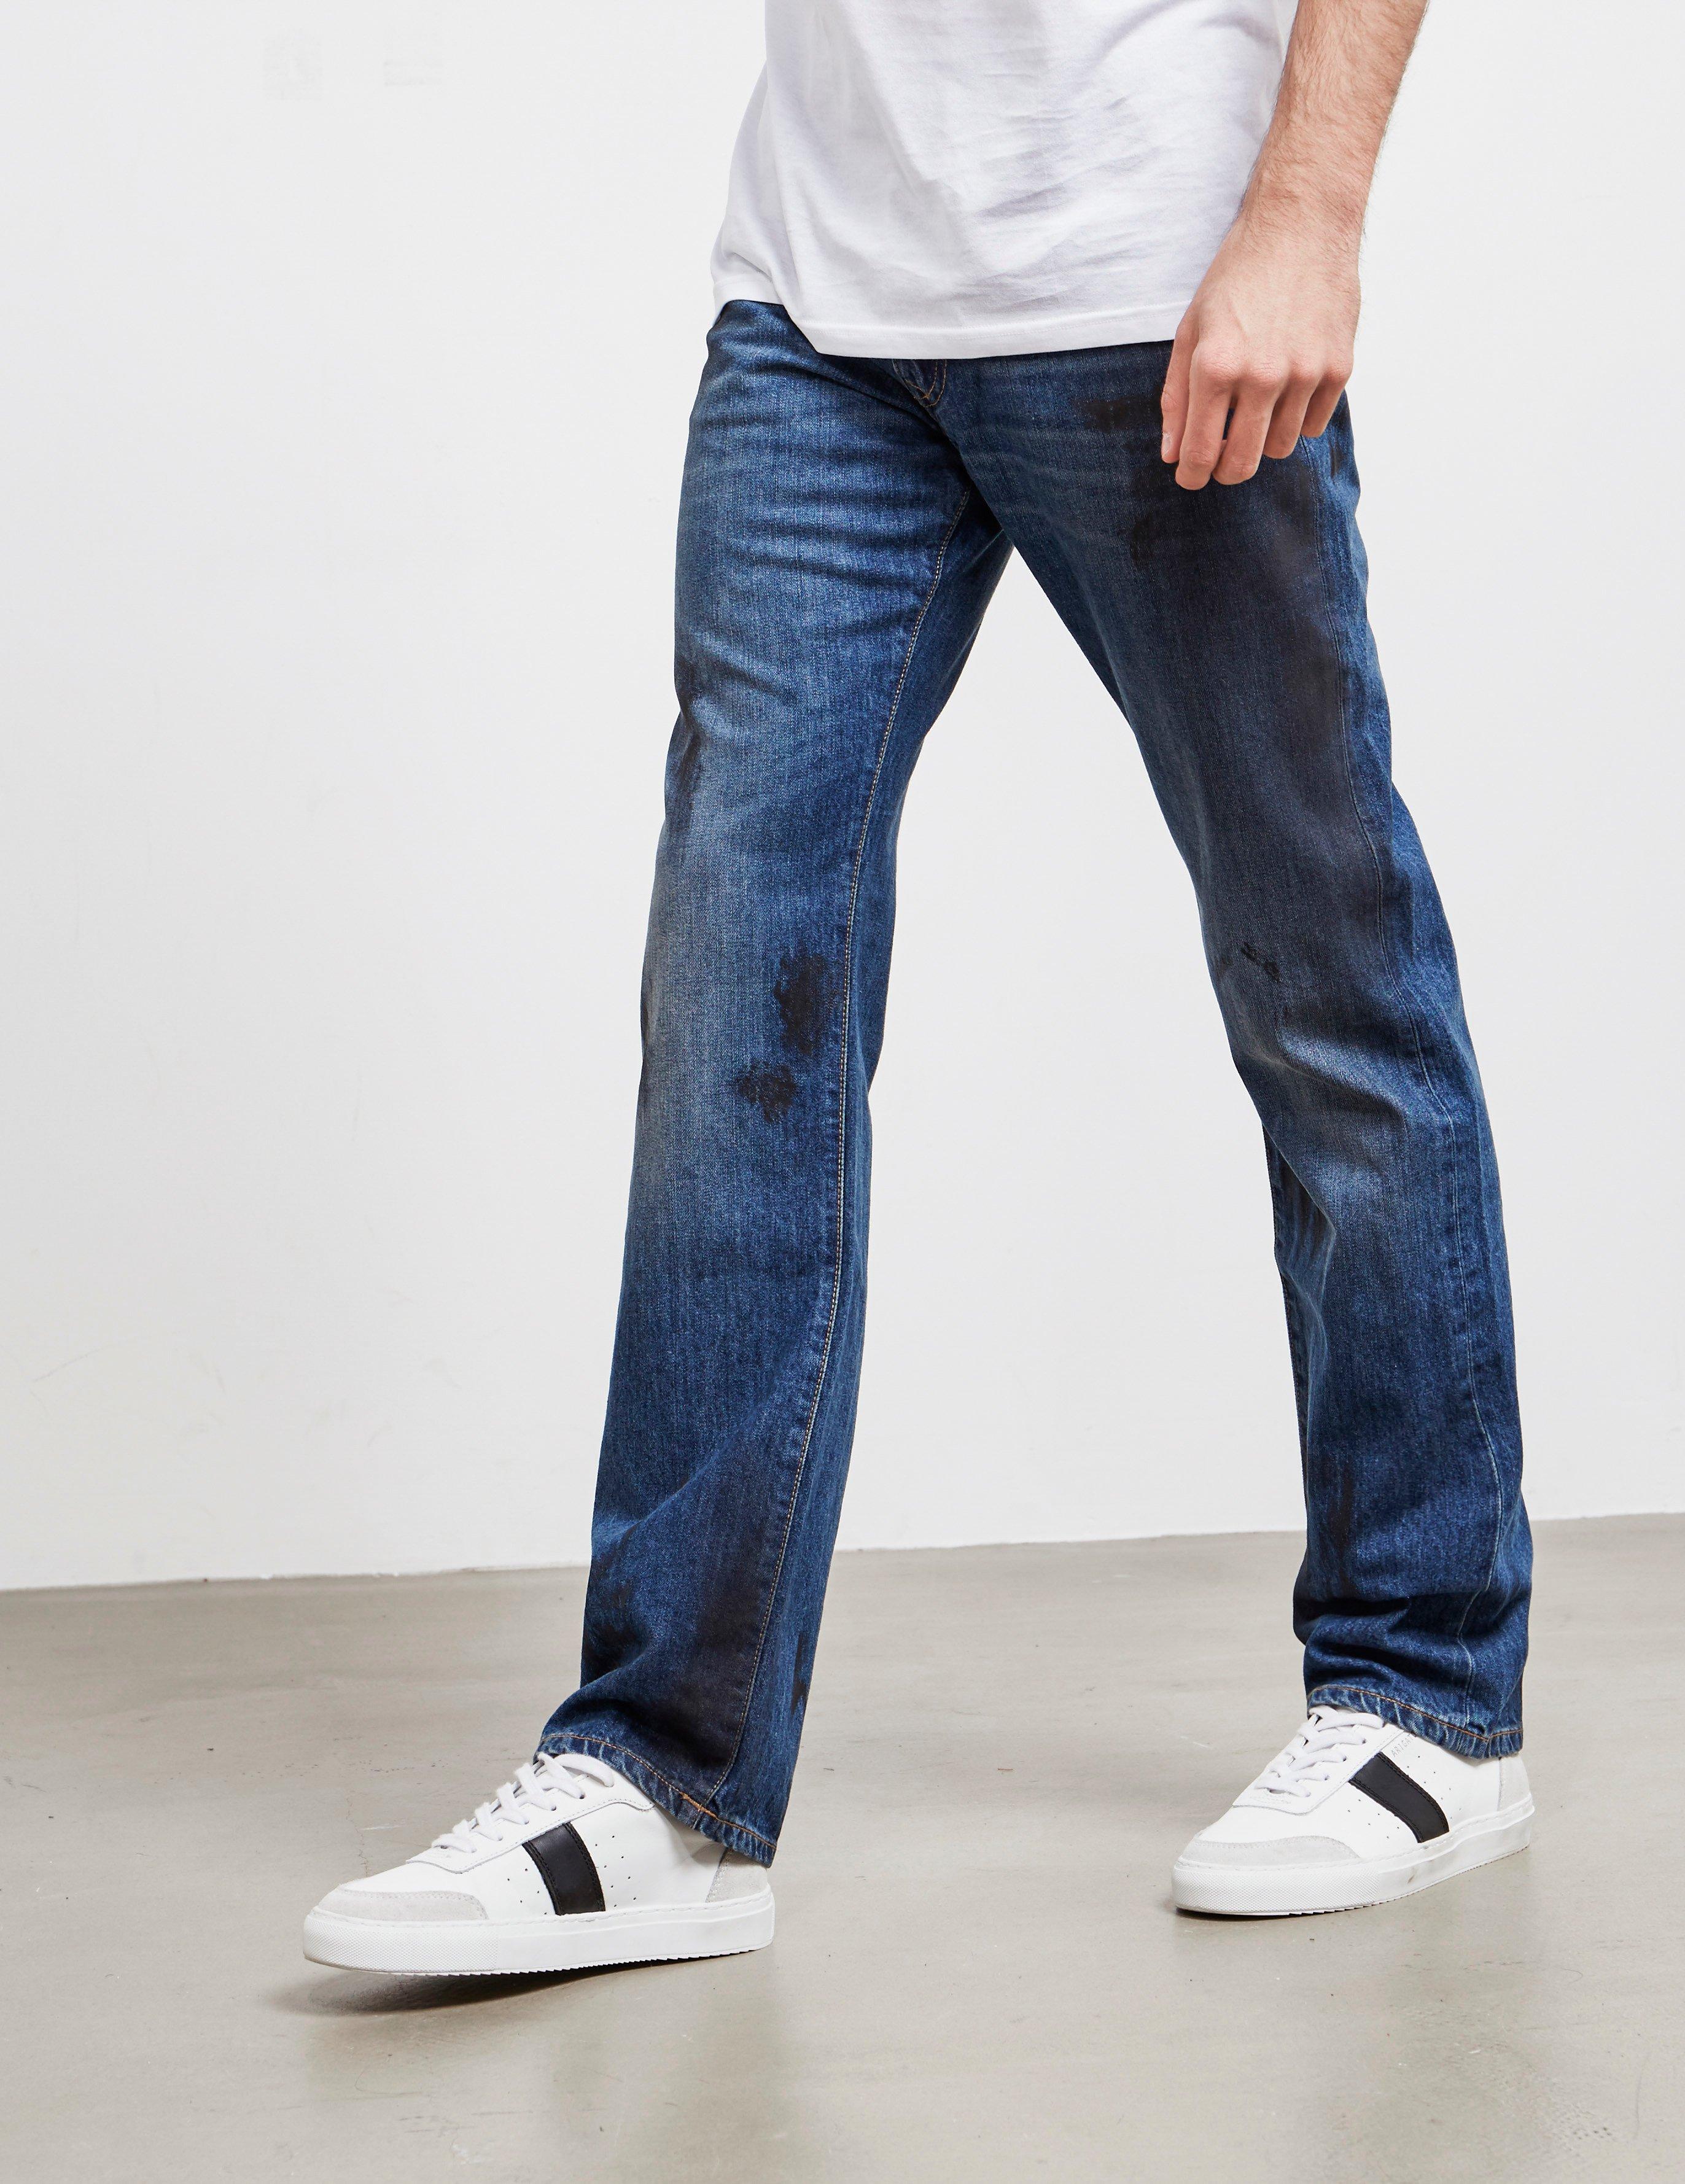 vivienne westwood mens jeans